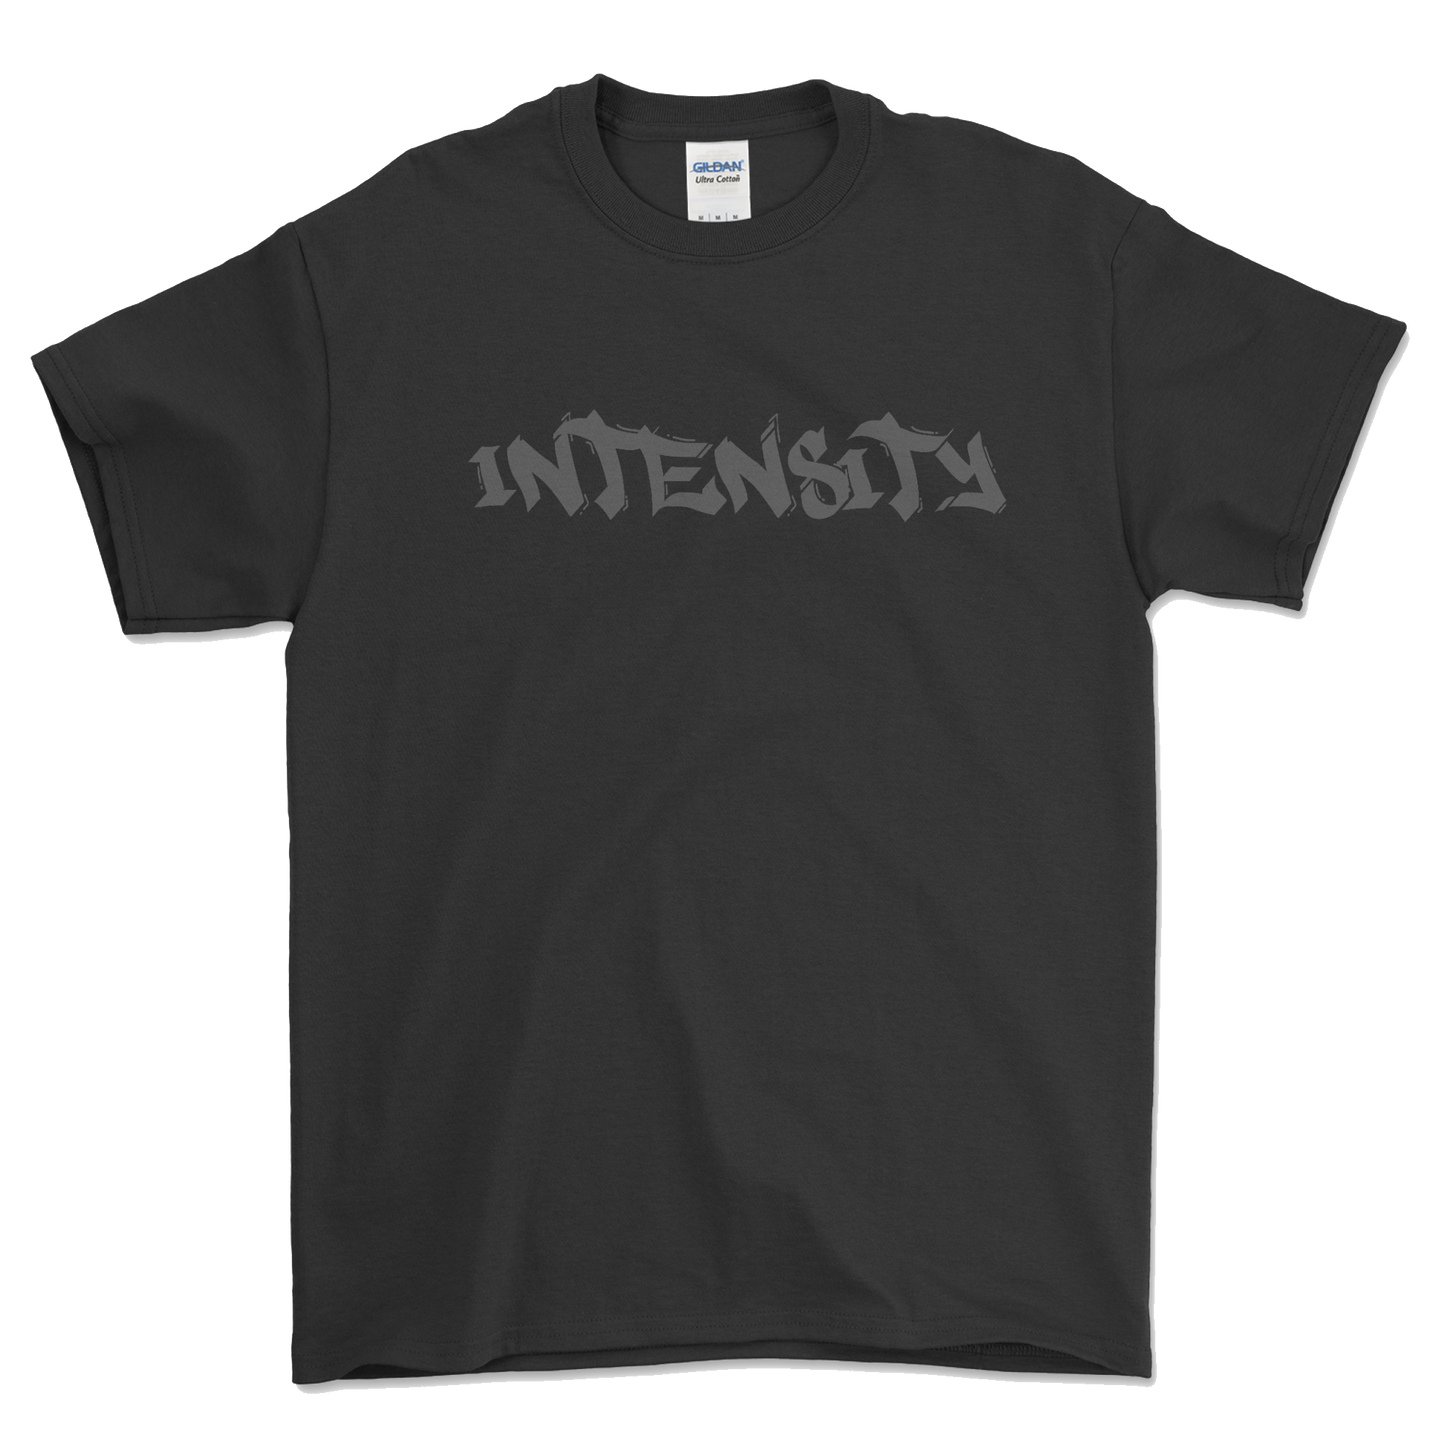 Men's "INTENSITY" Solid Black T-Shirt